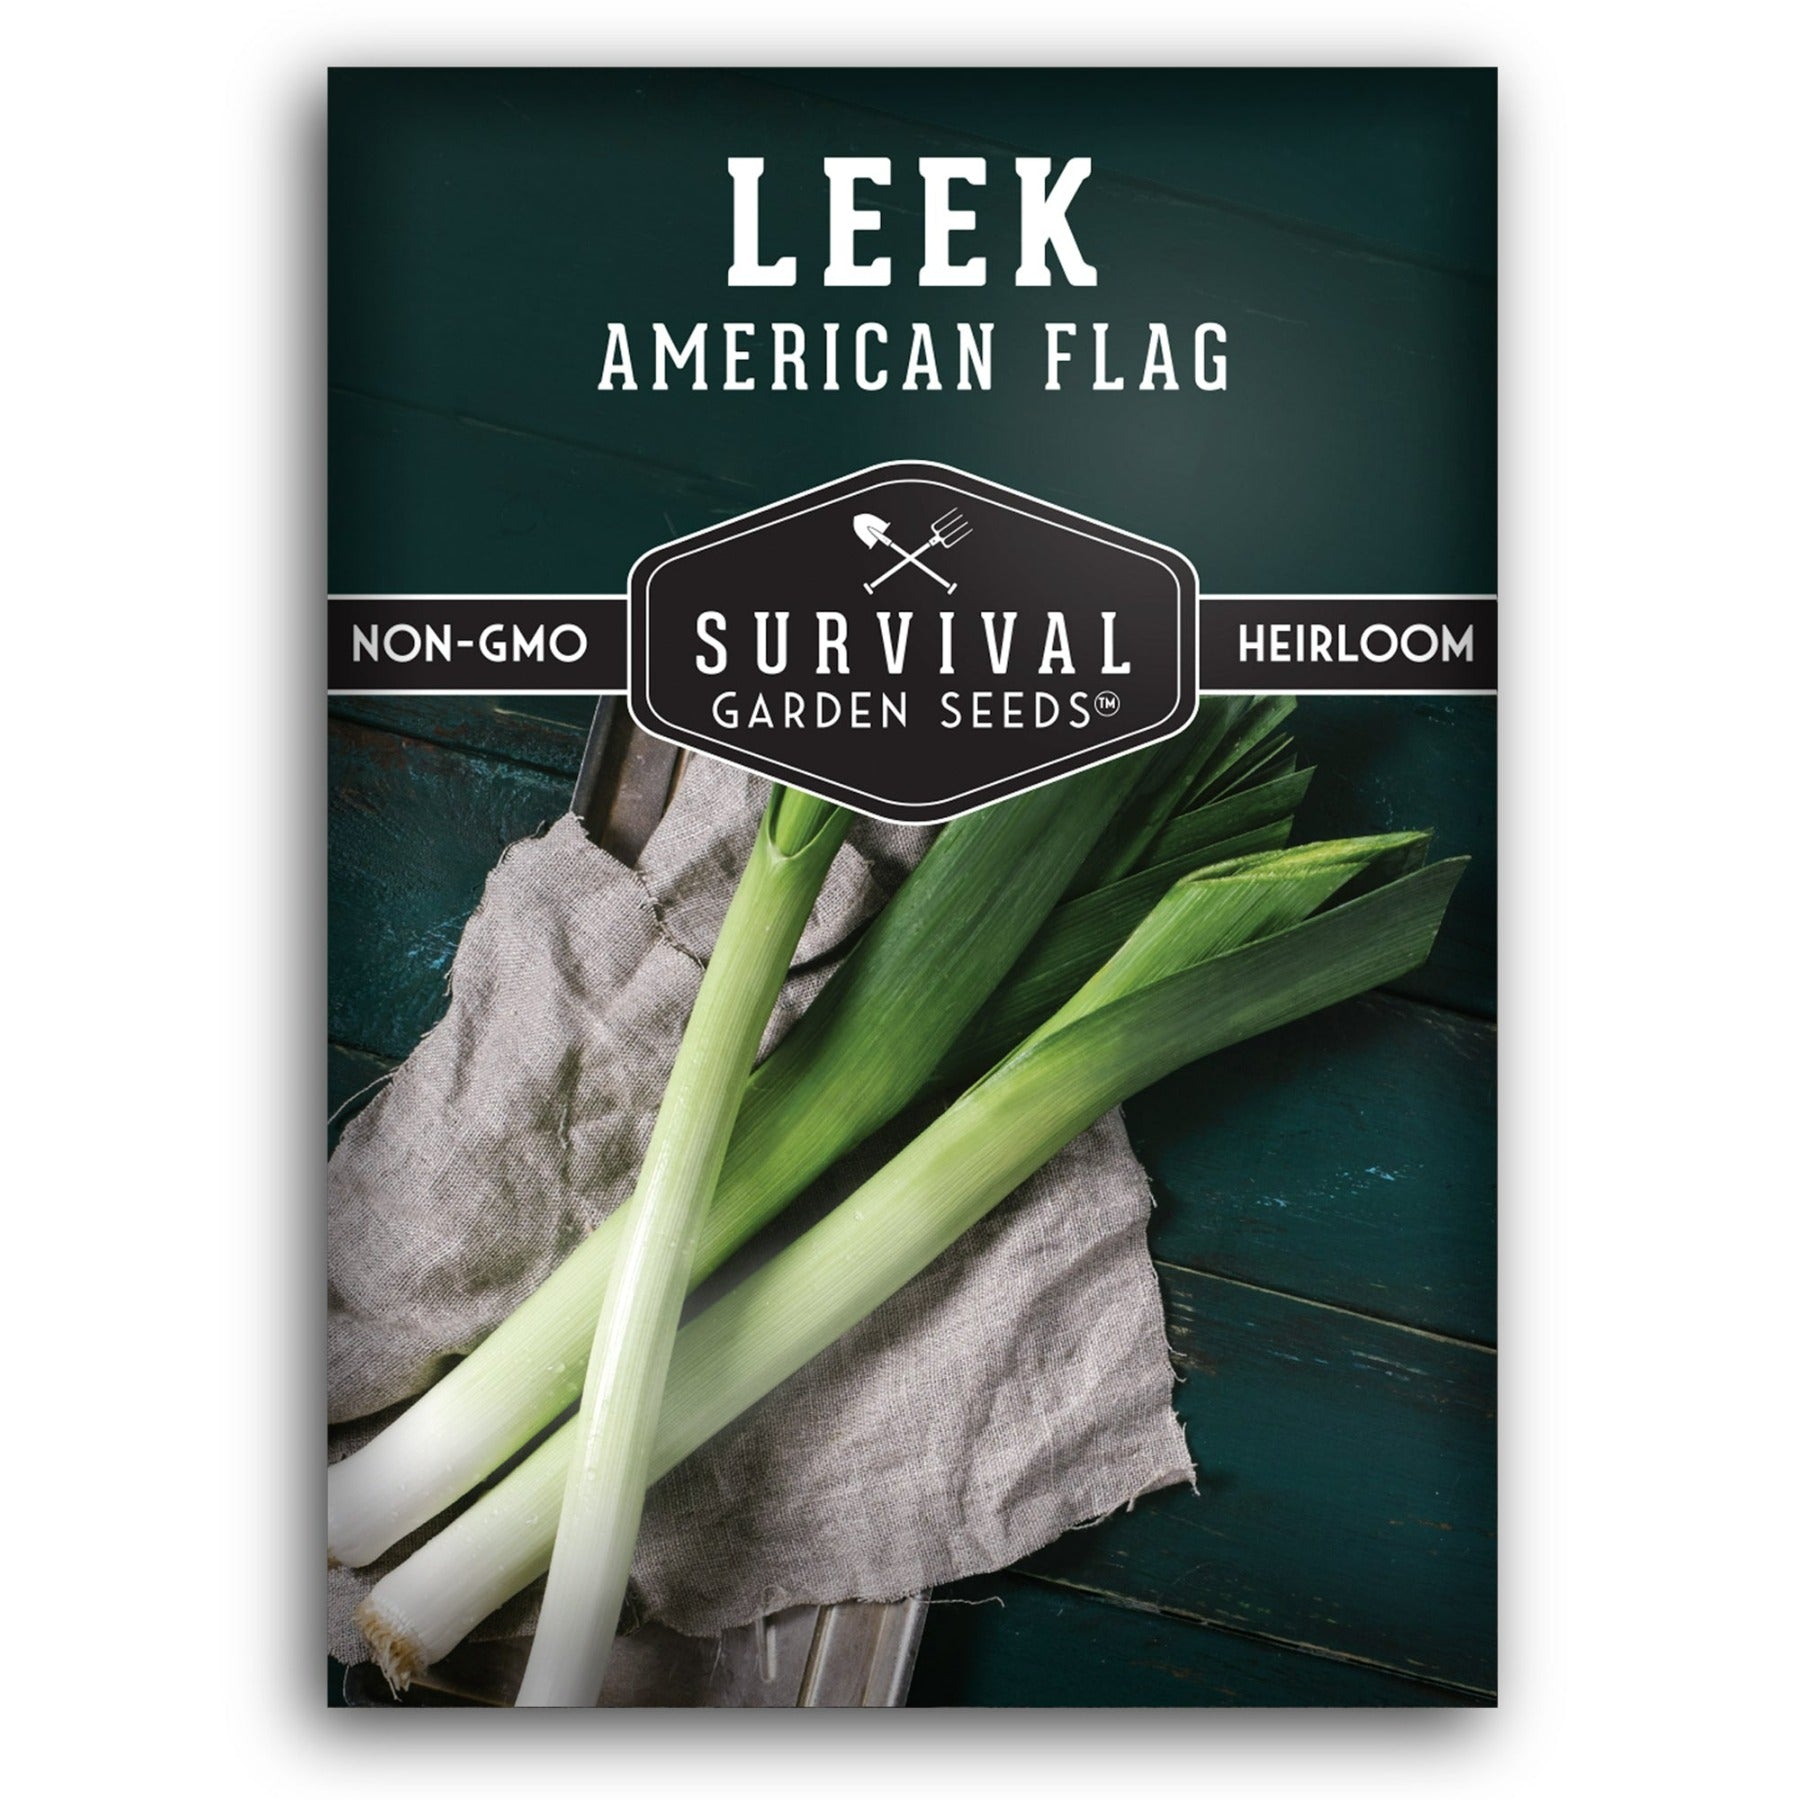 American Flag Leek seeds for planting